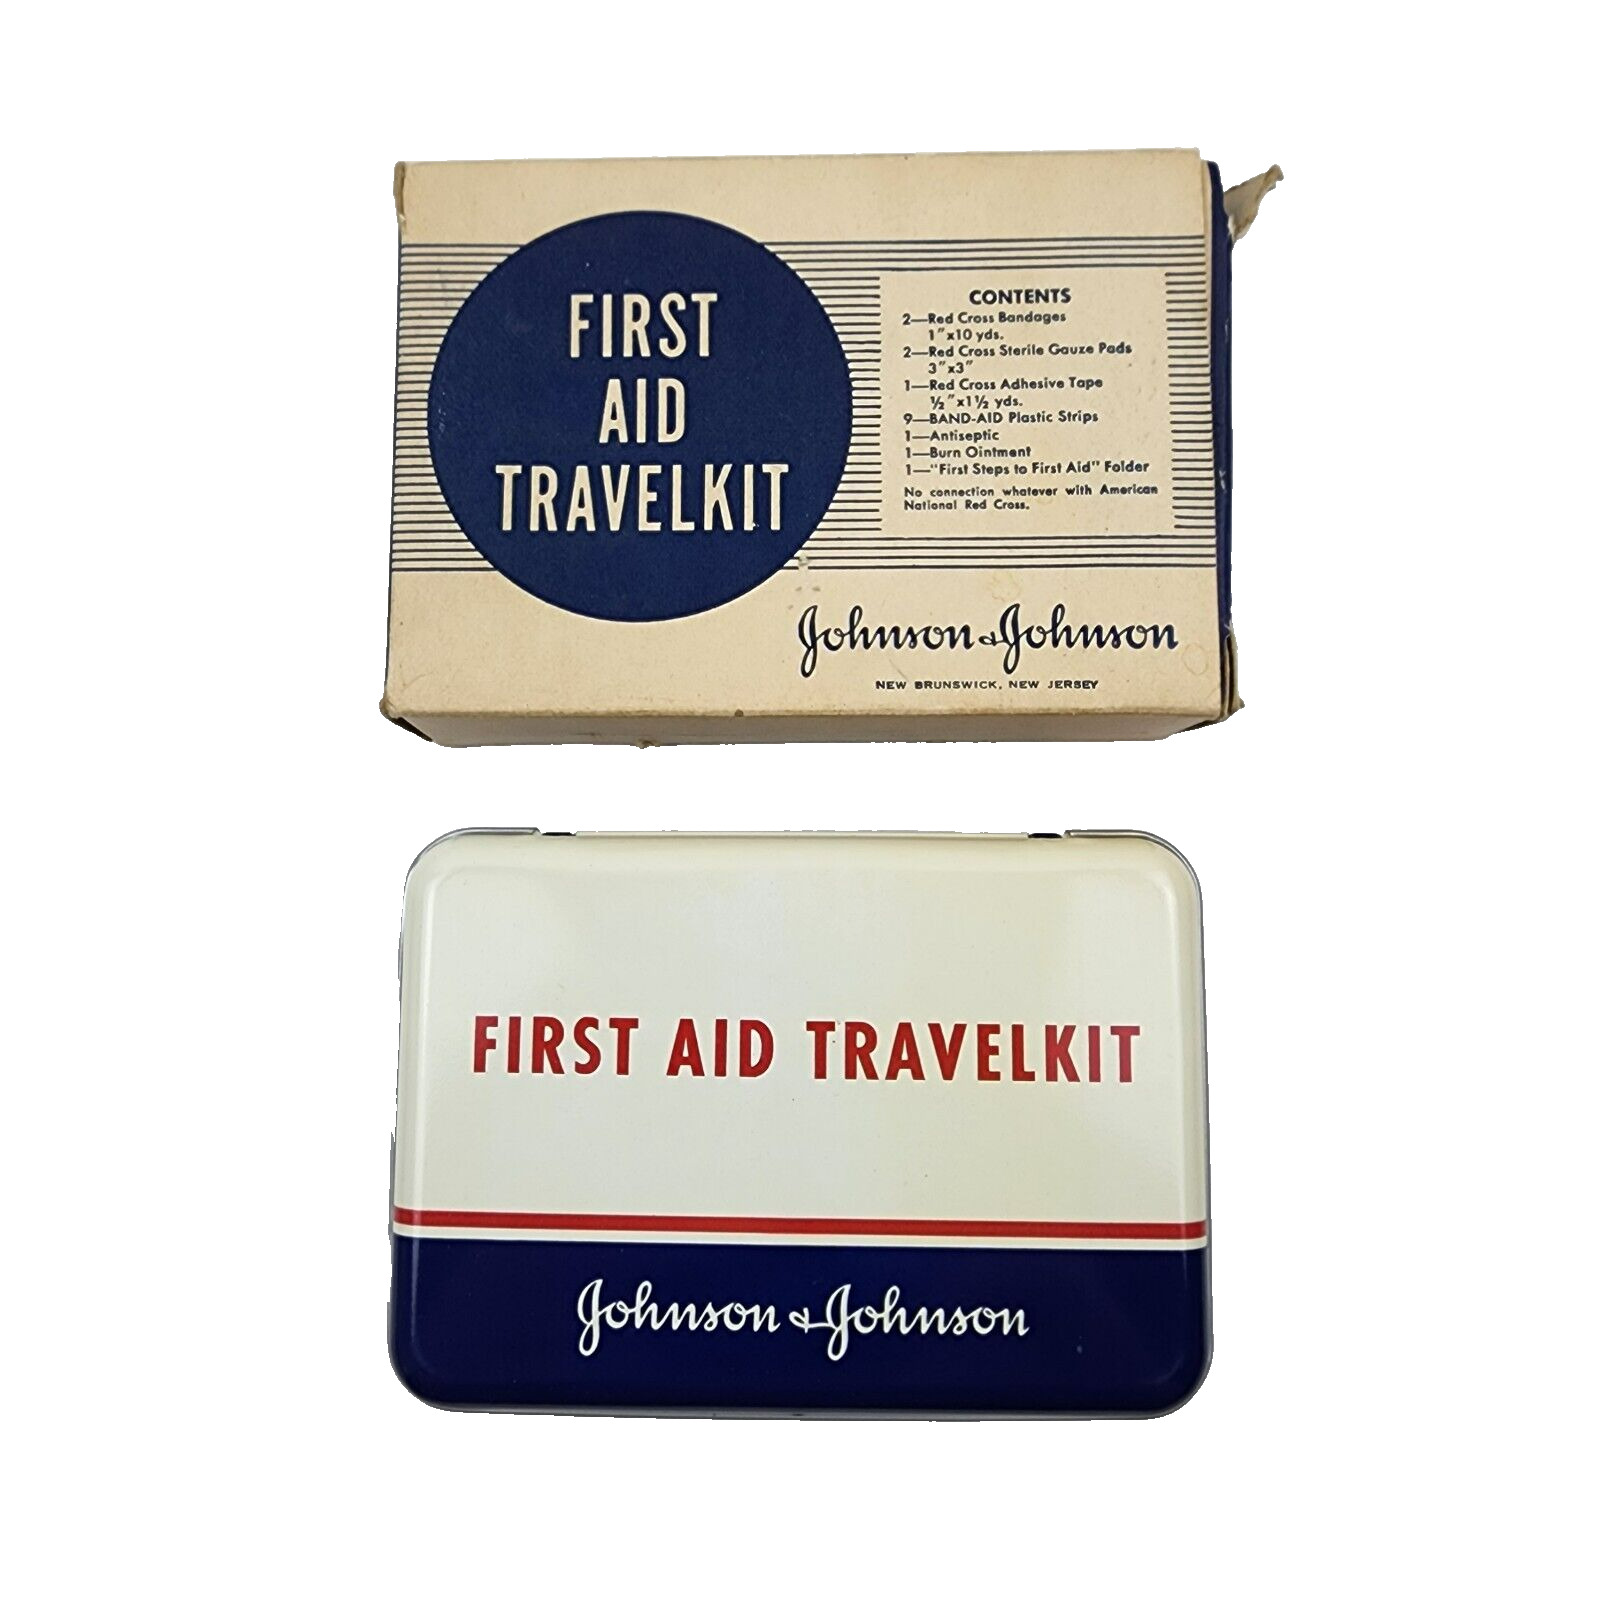 UNUSED NOS 1950s Vintage Johnson & Johnson First Aid Travel Kit